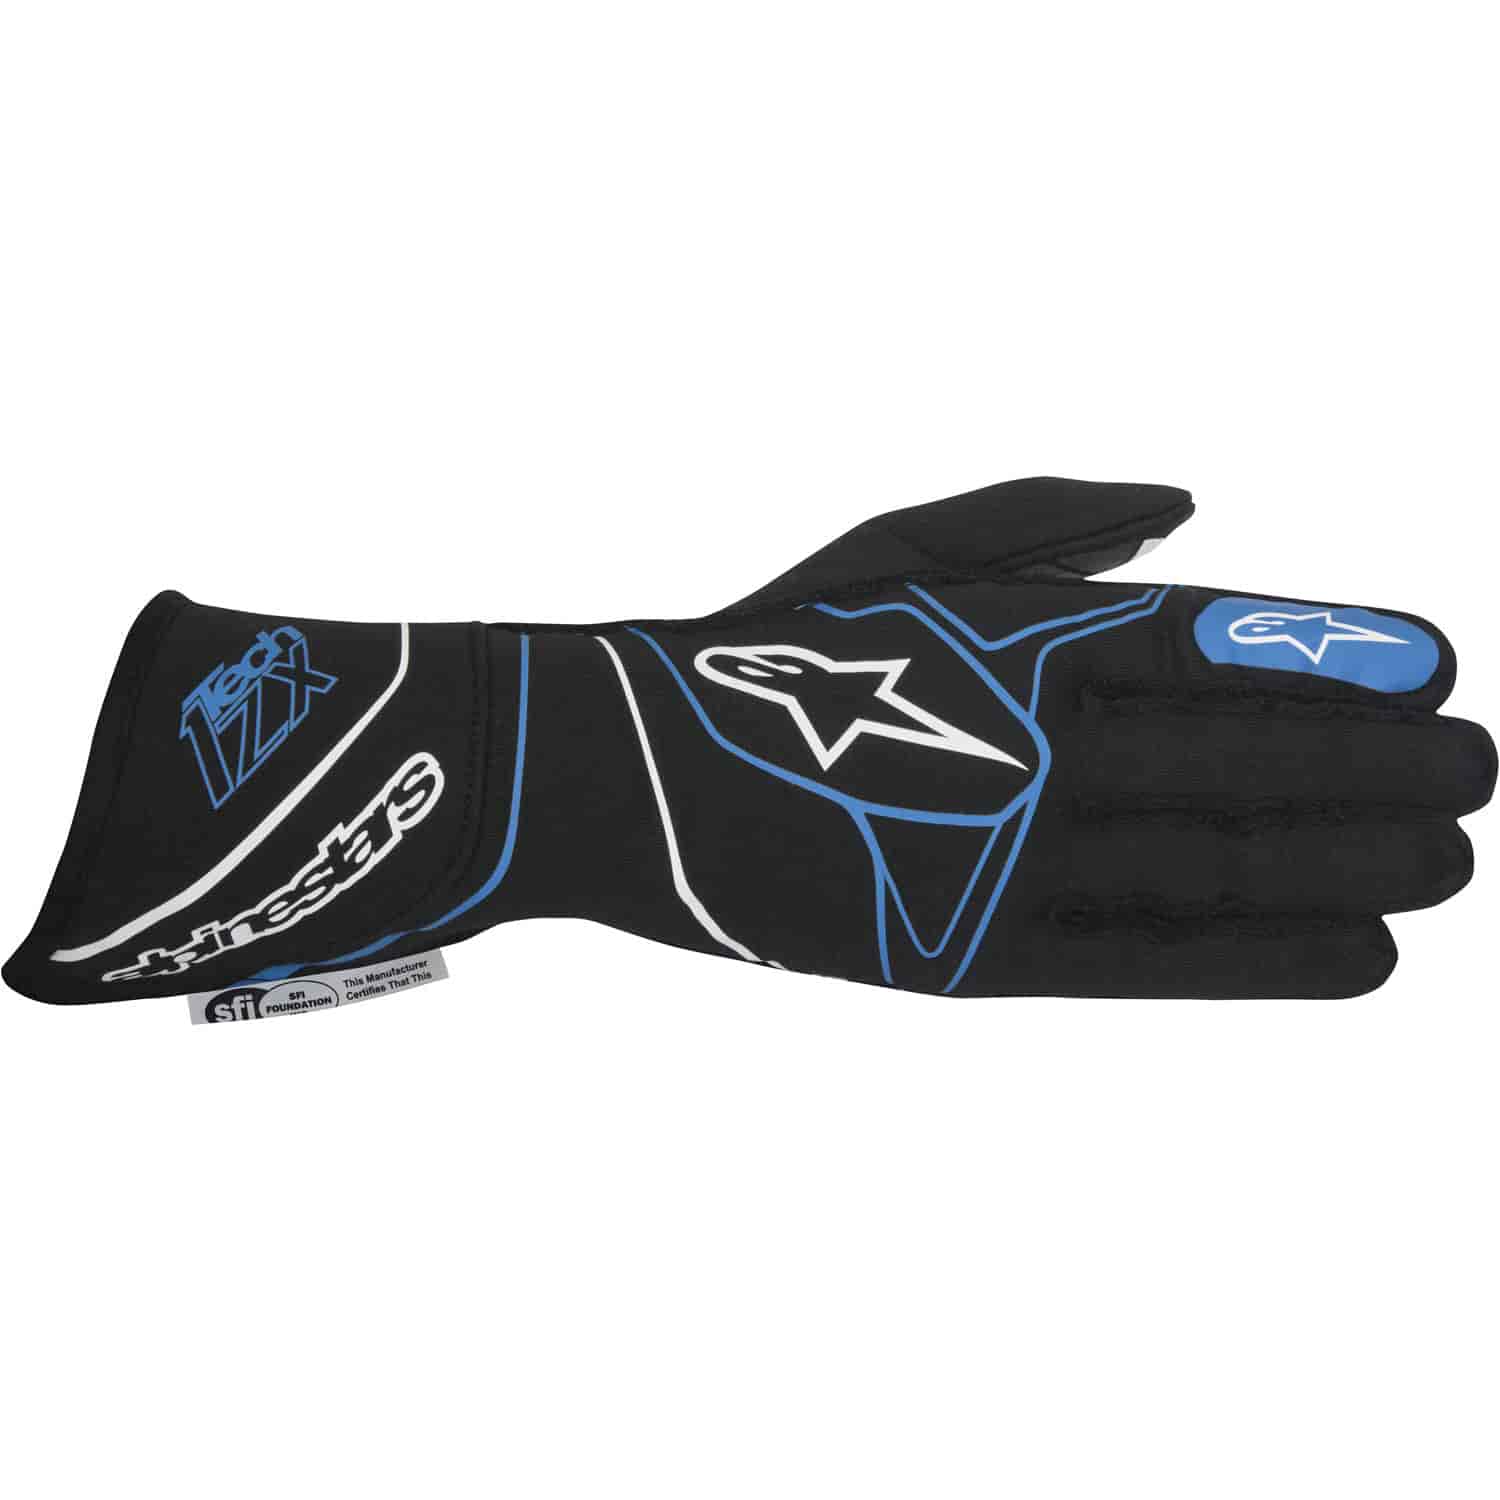 Tech 1-ZX Glove Black/Blue SFI 3.3/5